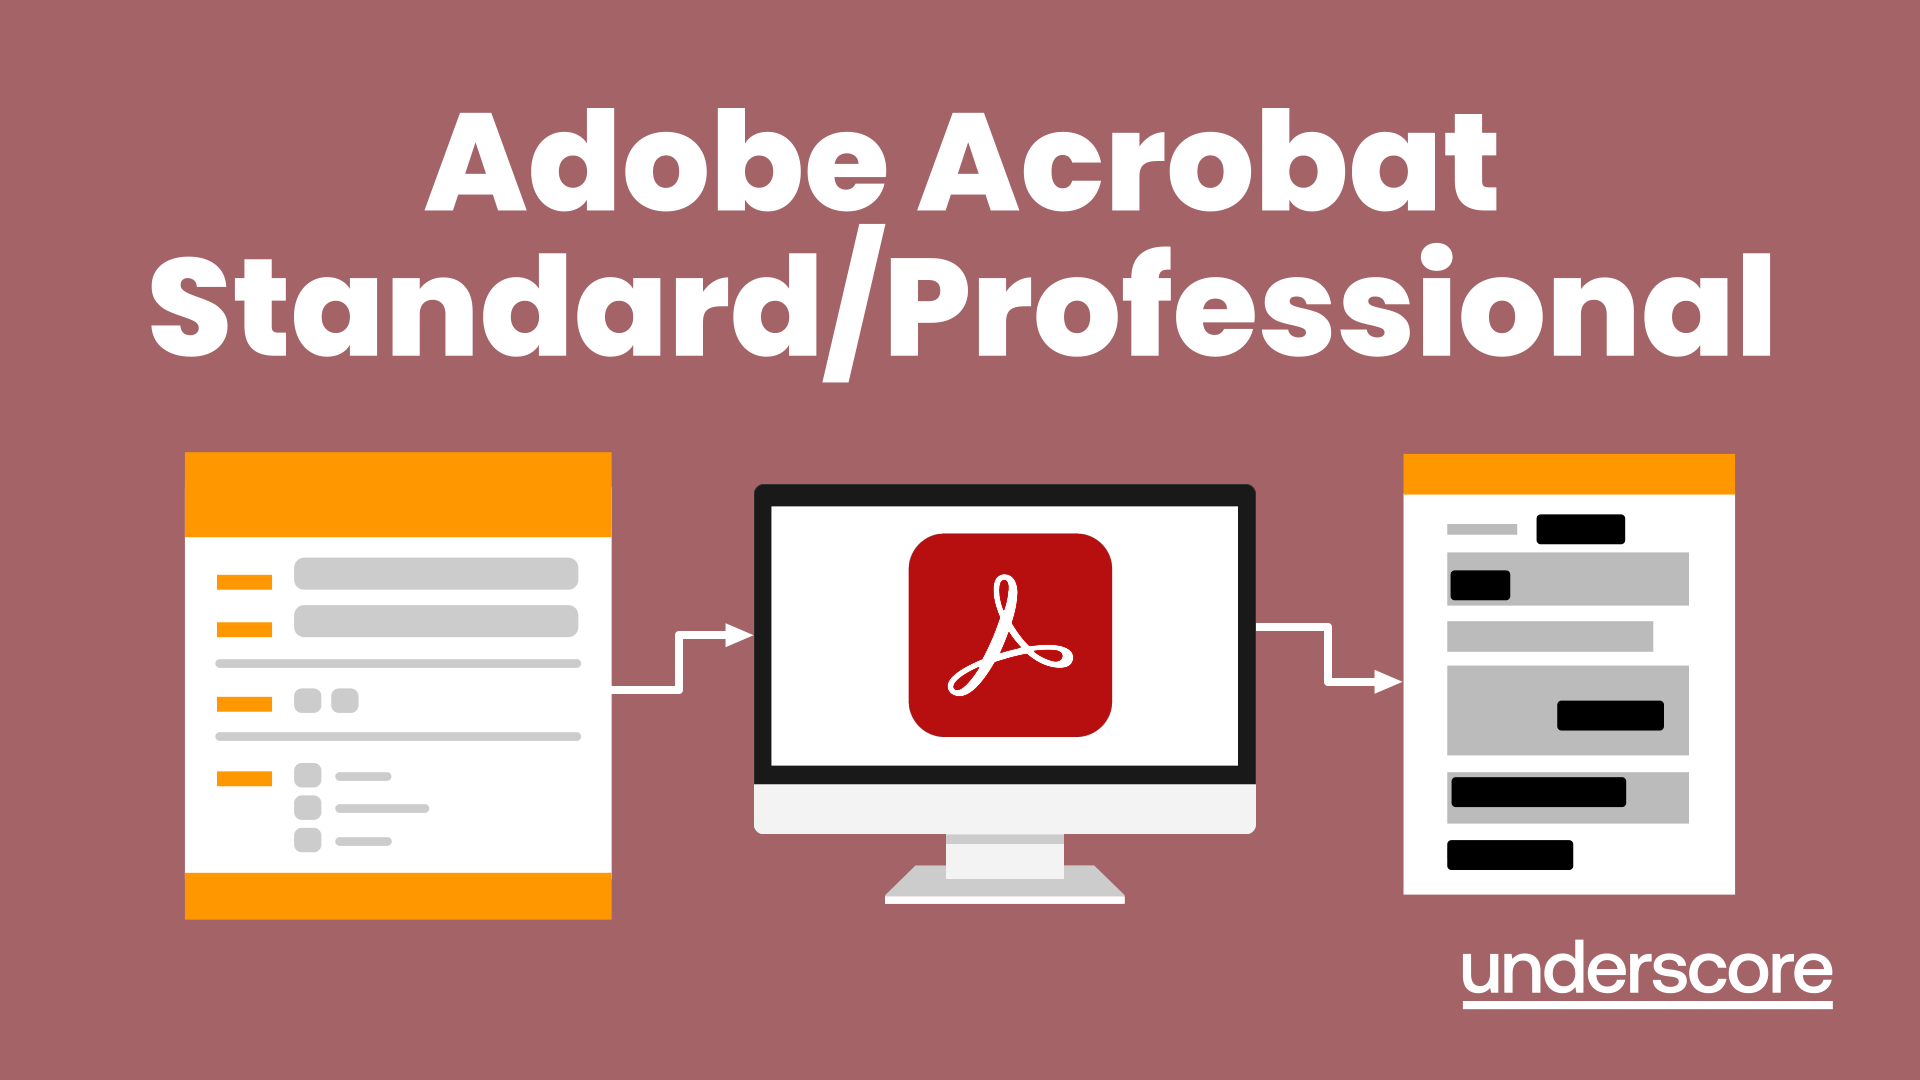 Adobe Acrobat (Standard or Professional)